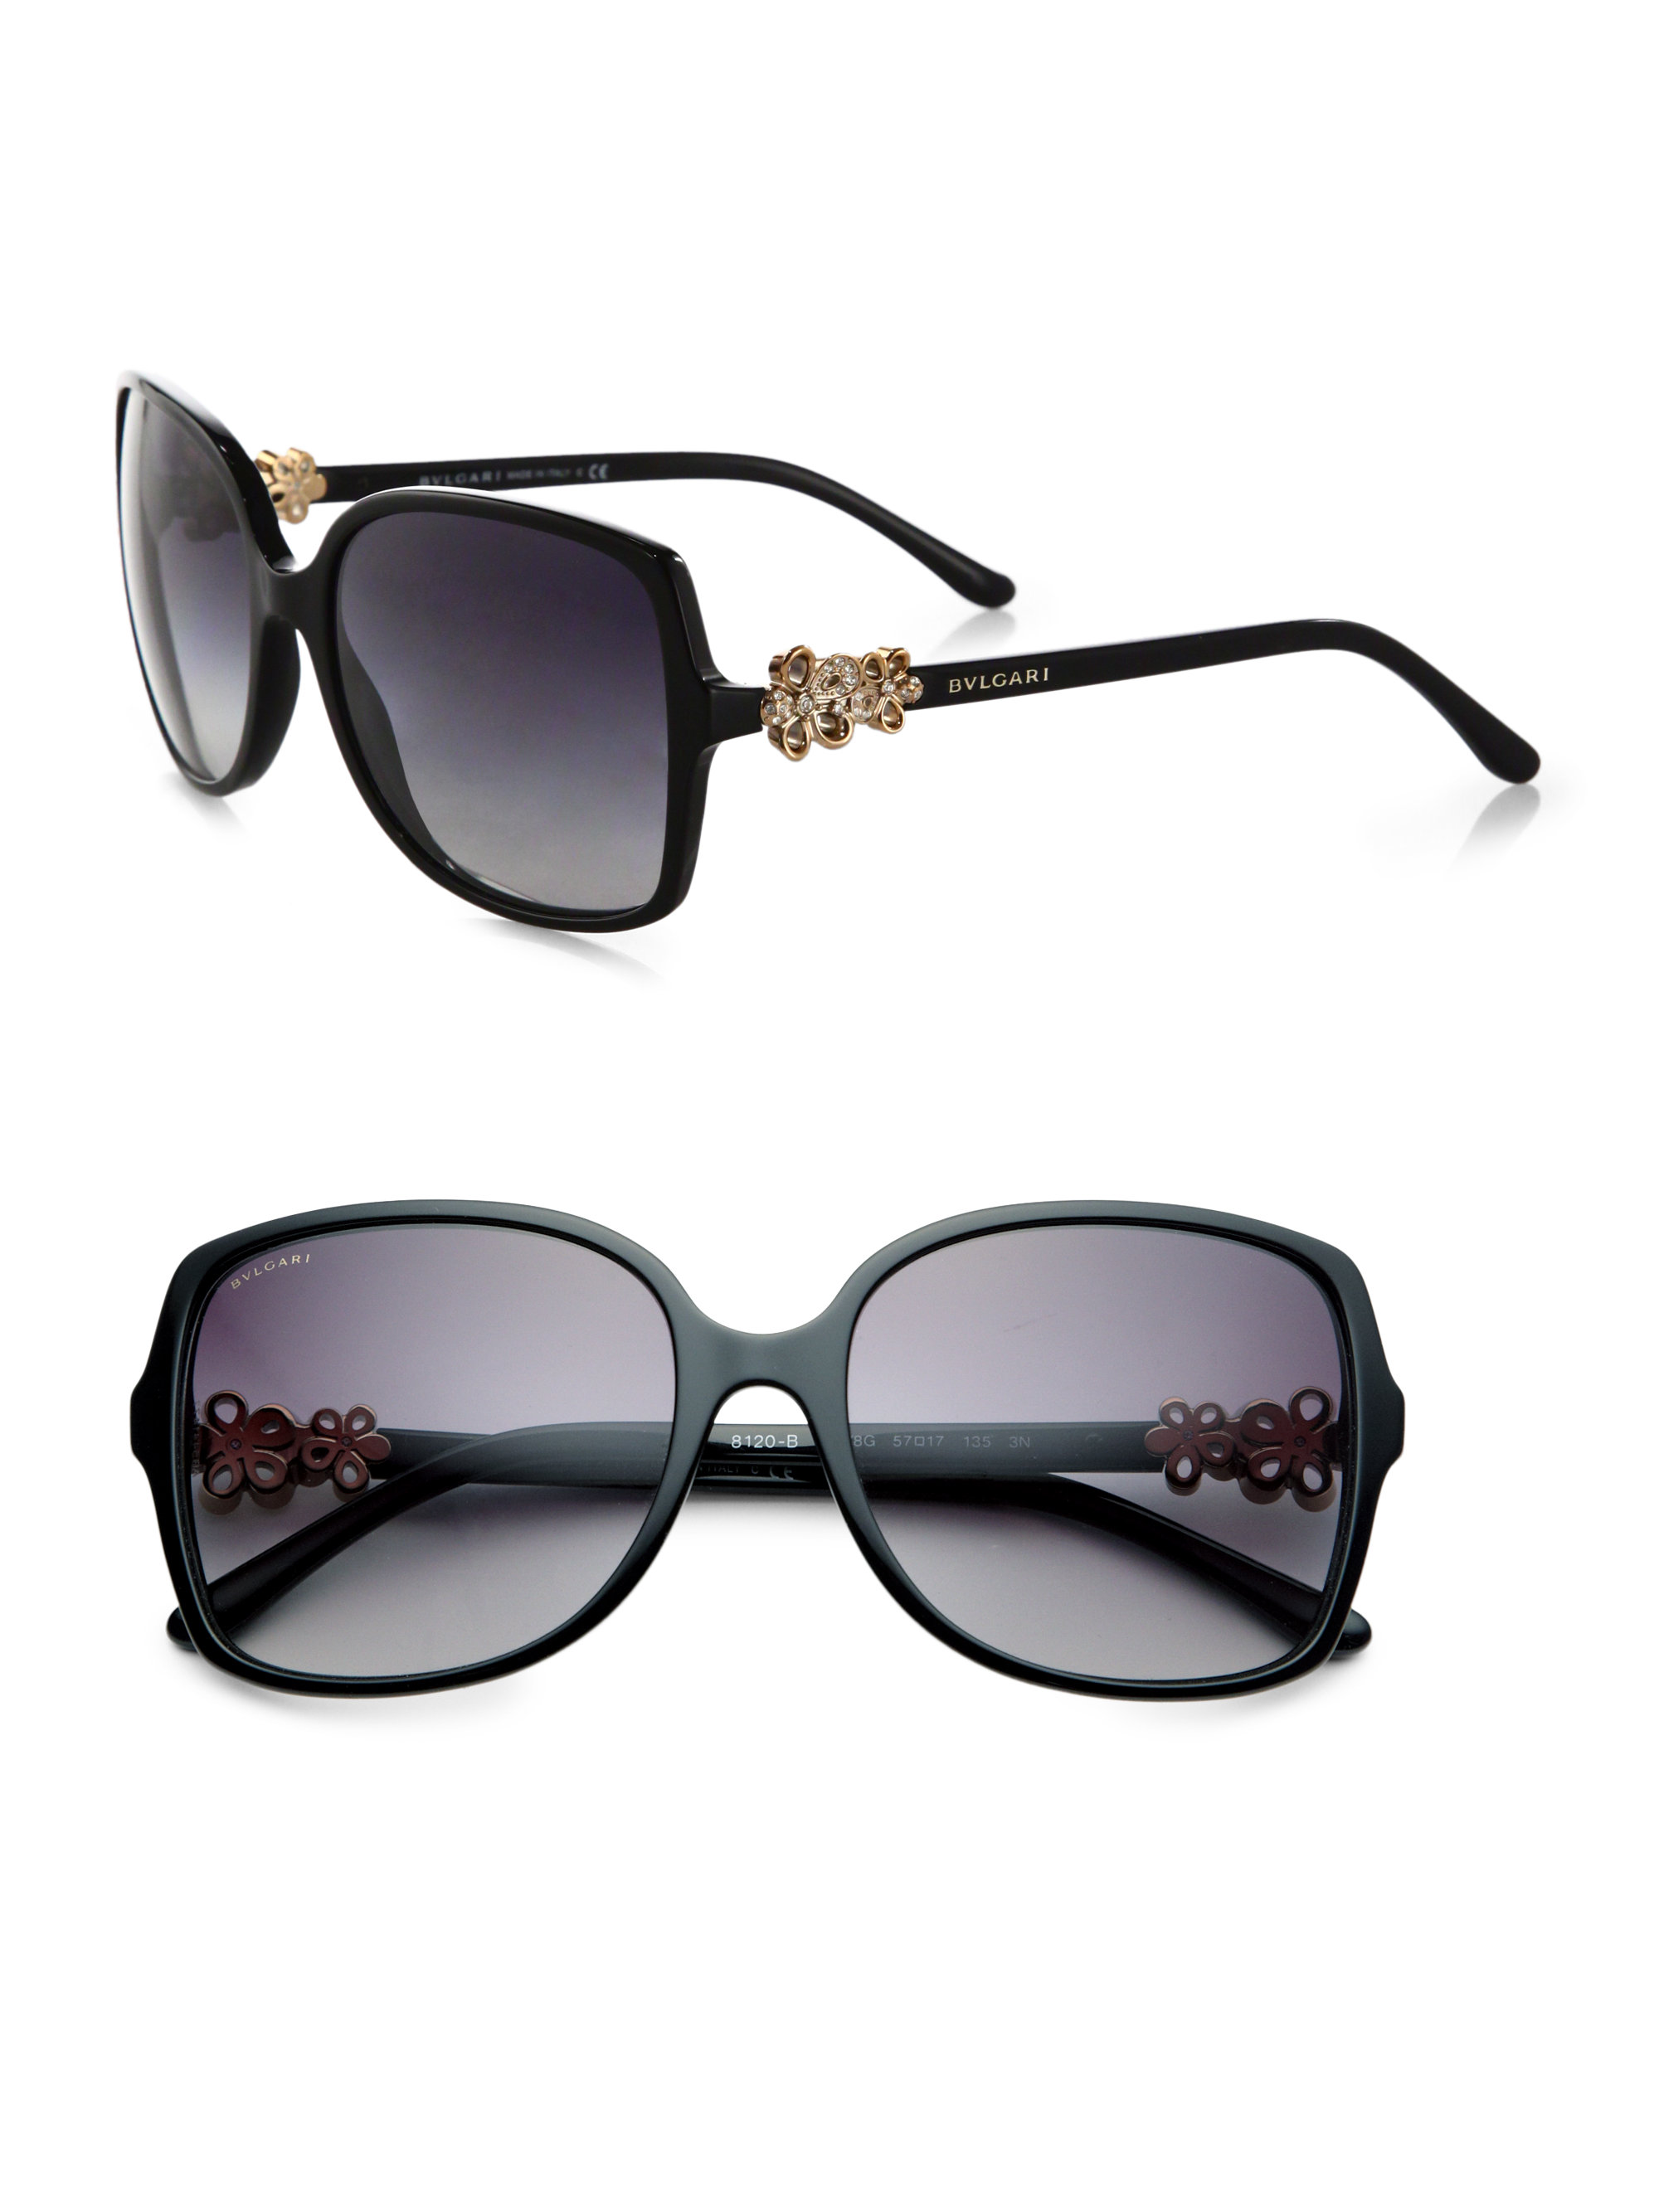 Lyst - Bvlgari Oversized Square Sunglasses in Black